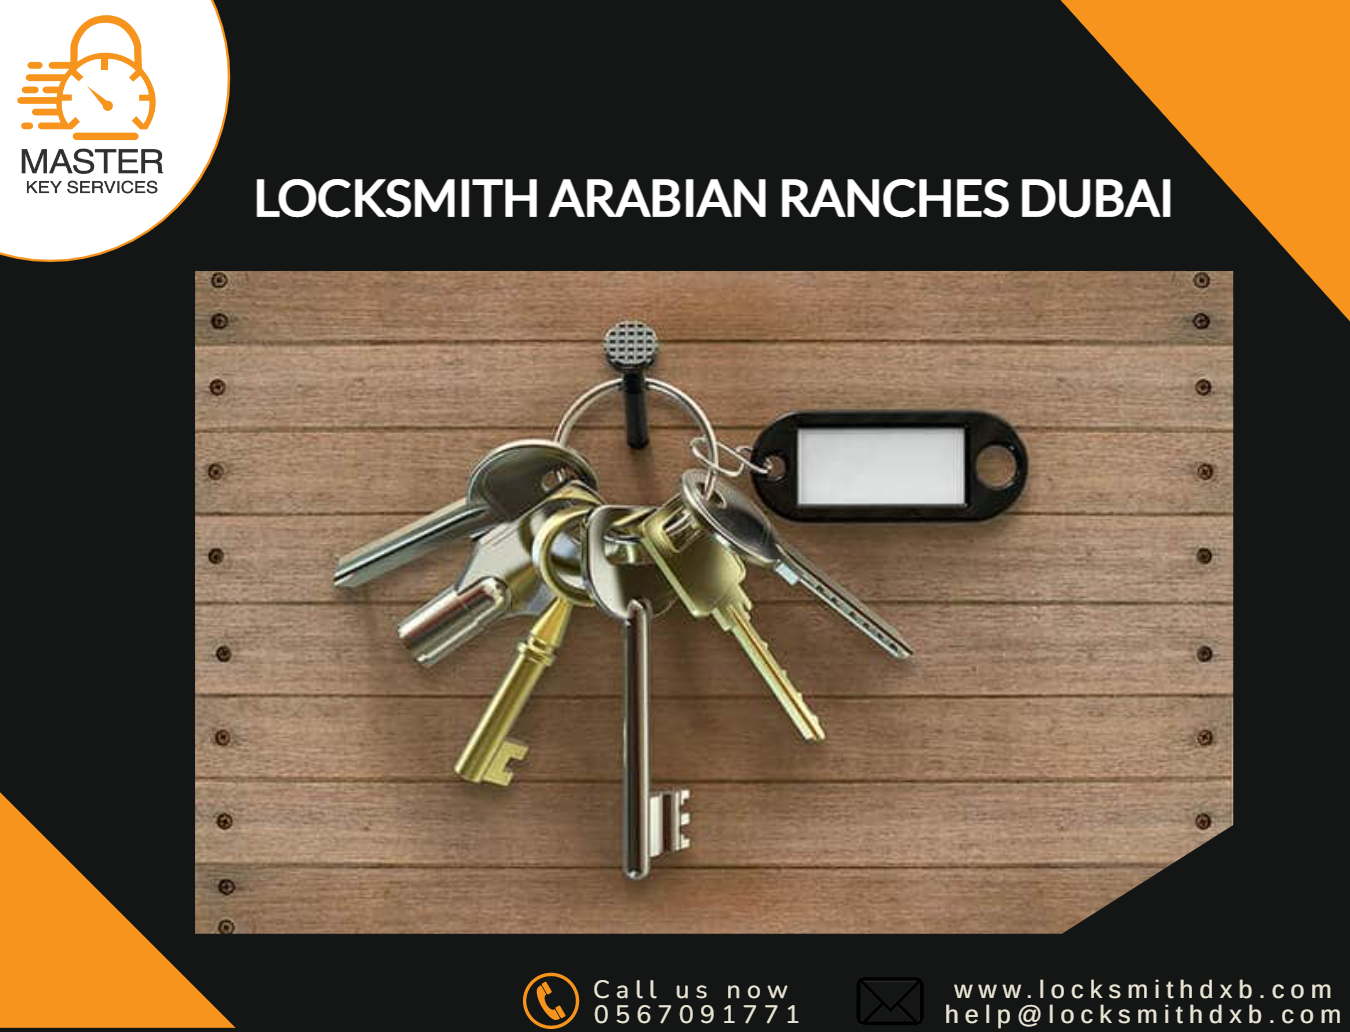 Locksmith Arabian Ranches Dubai